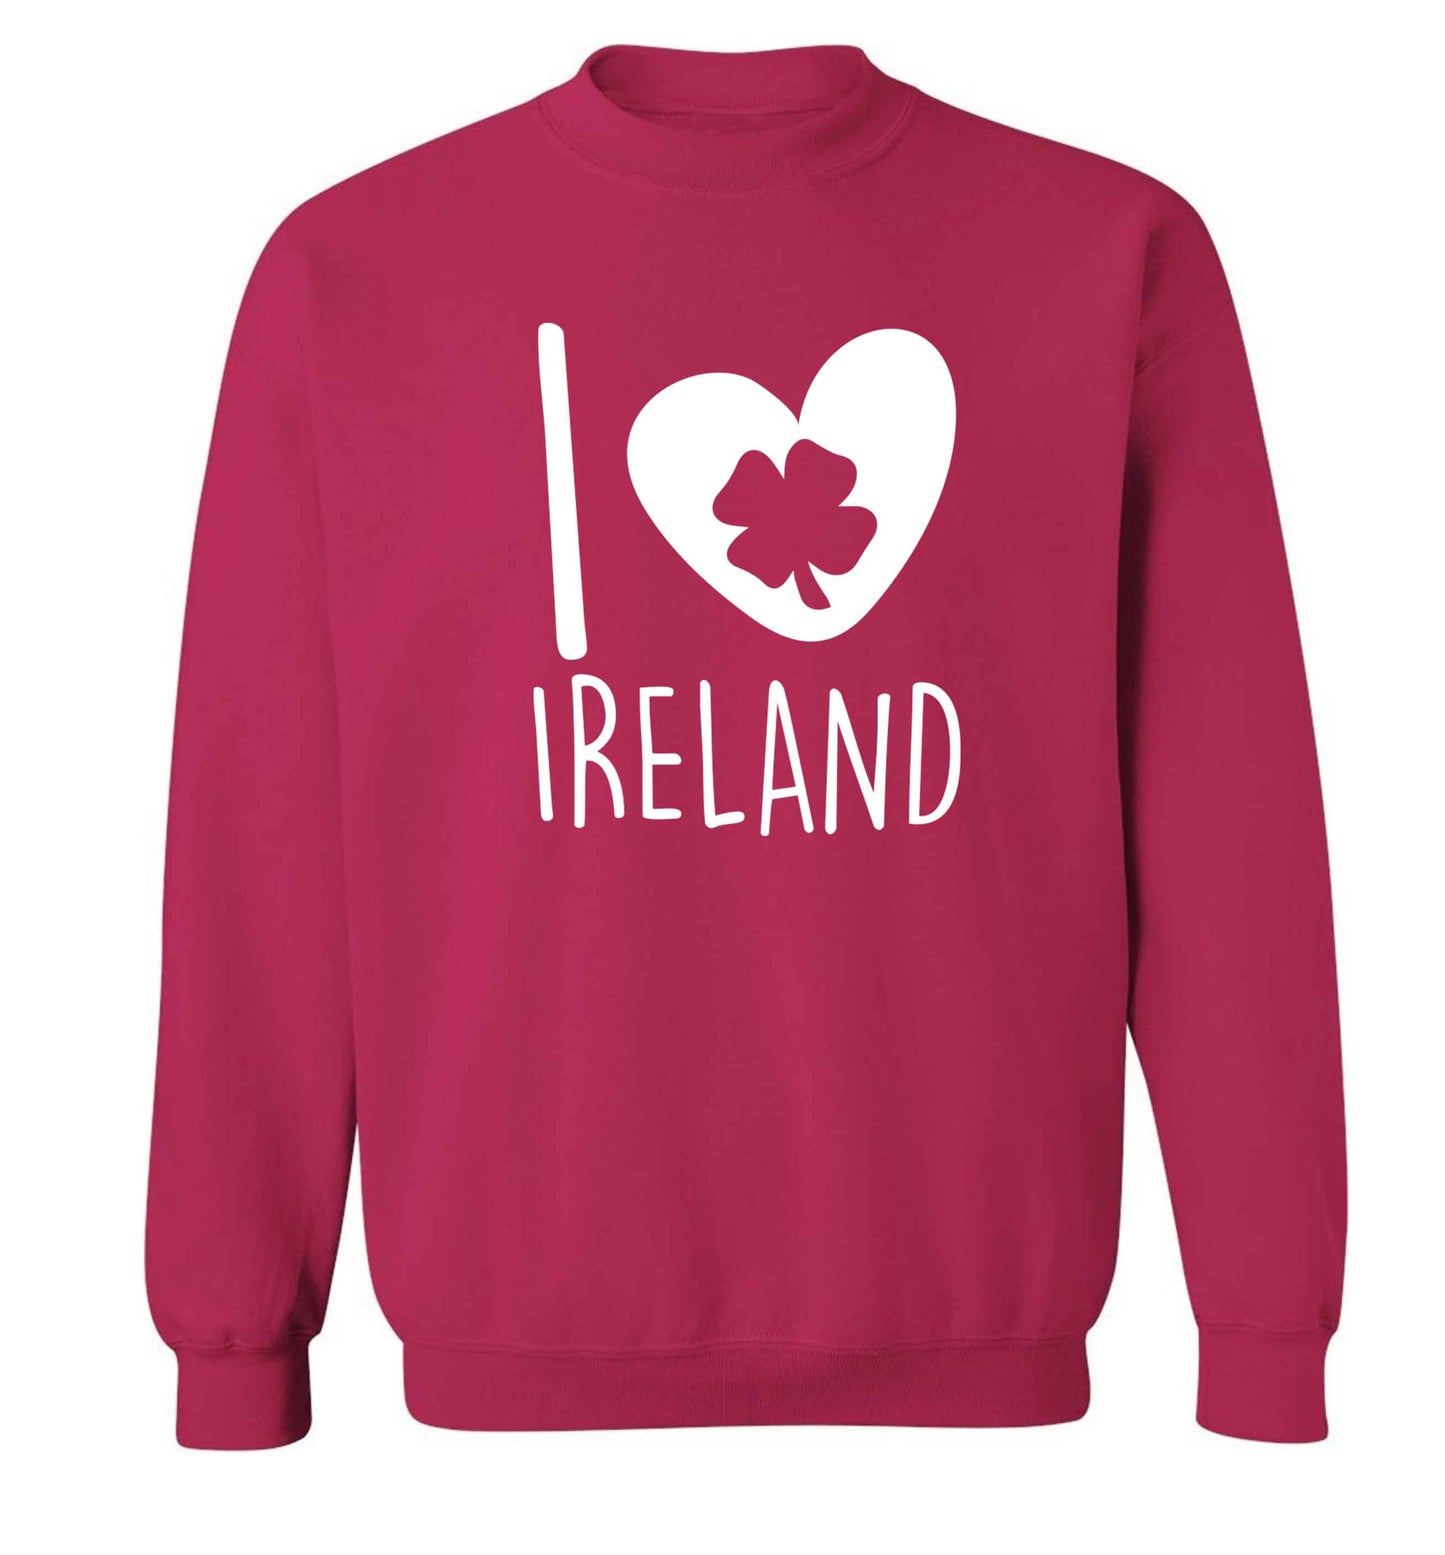 I love Ireland adult's unisex pink sweater 2XL